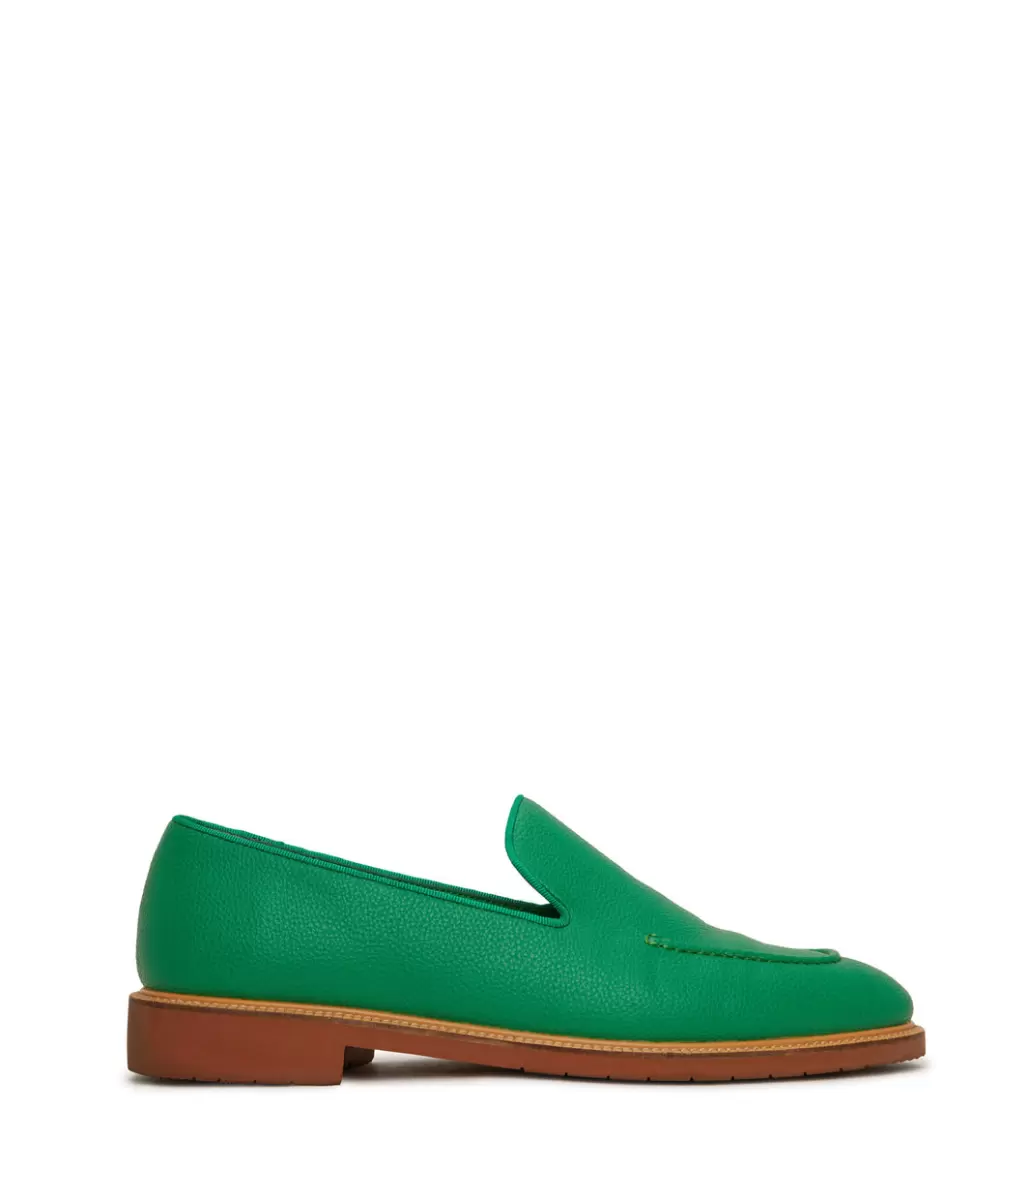 Matt & Nat Limited Time Offer Footwear Altman Men's Vegan Slip On Loafers Men Green